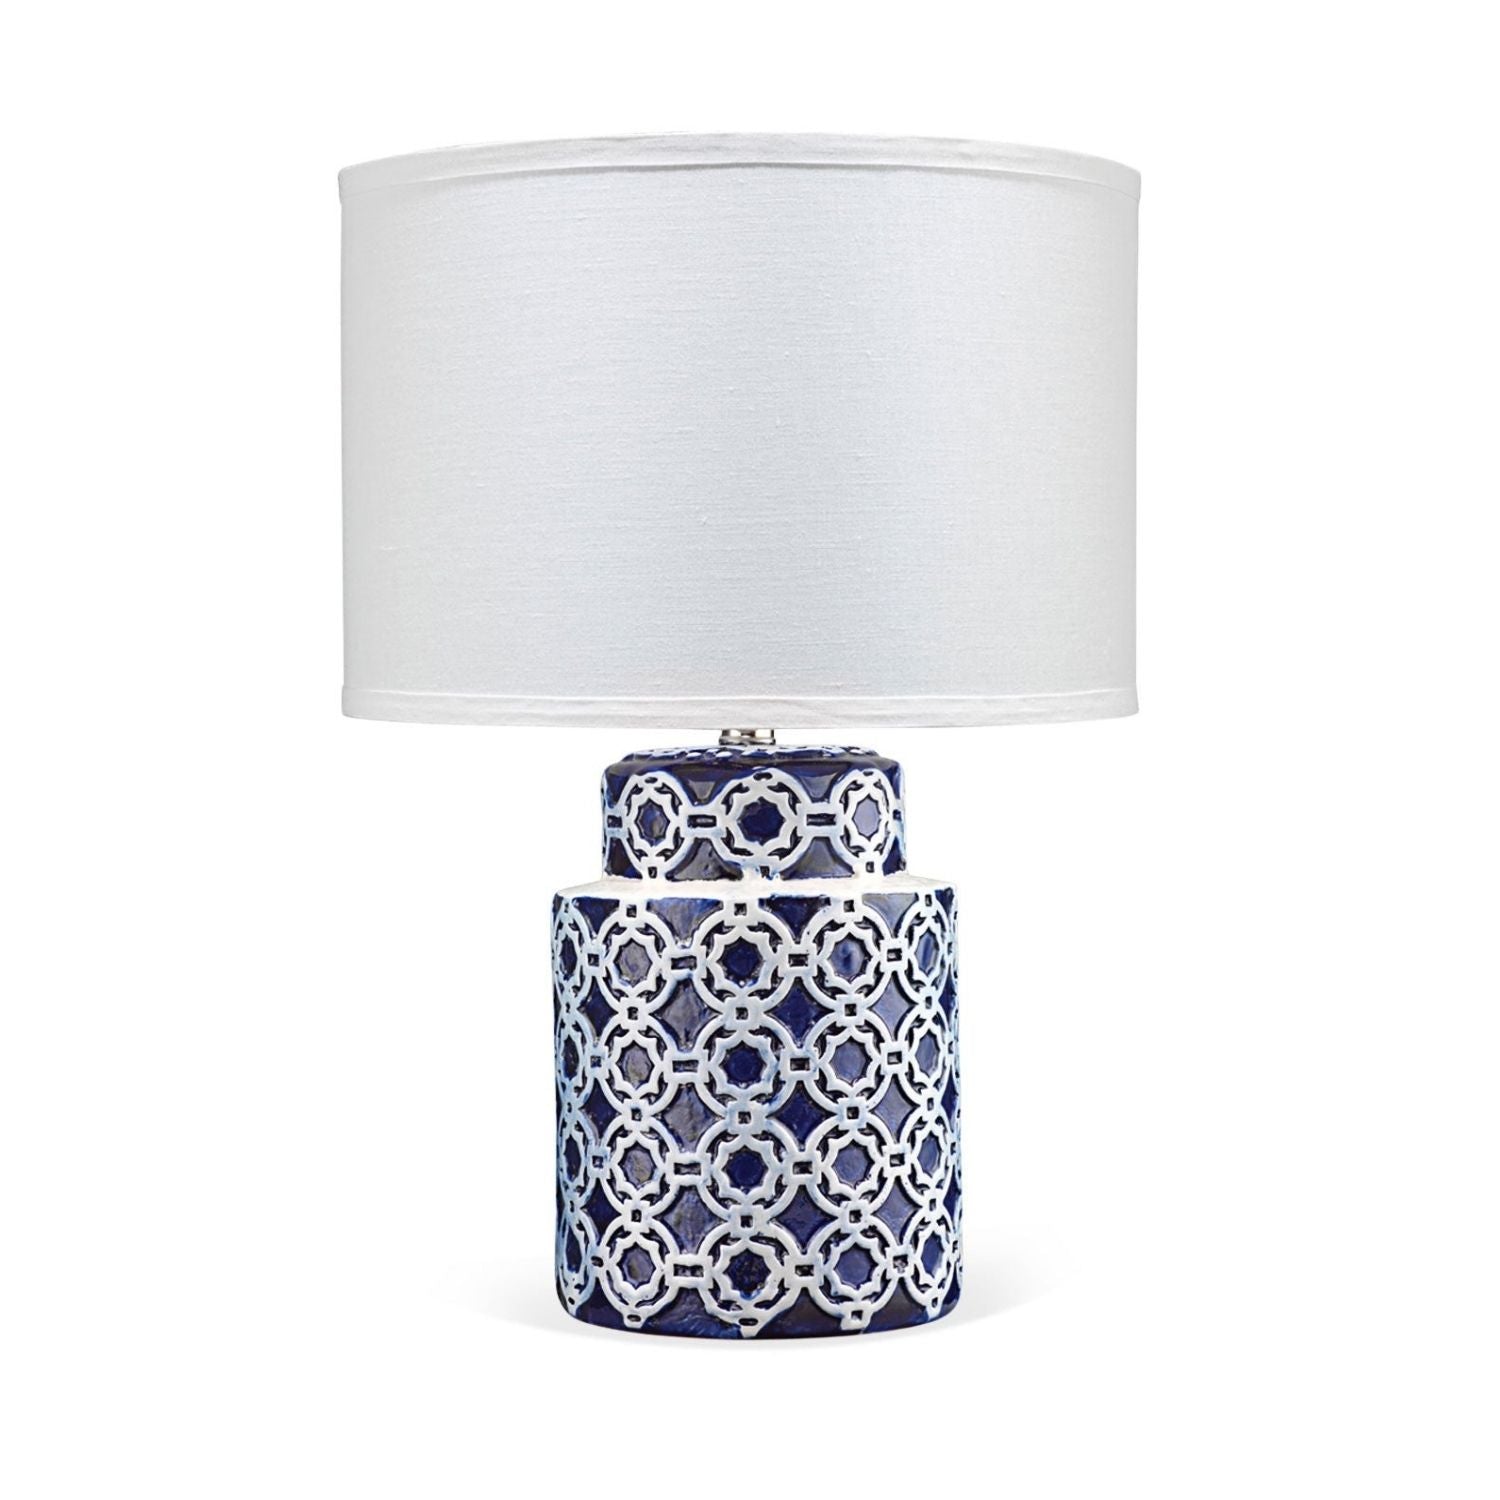 Marina Ceramic Table Lamp, Blue